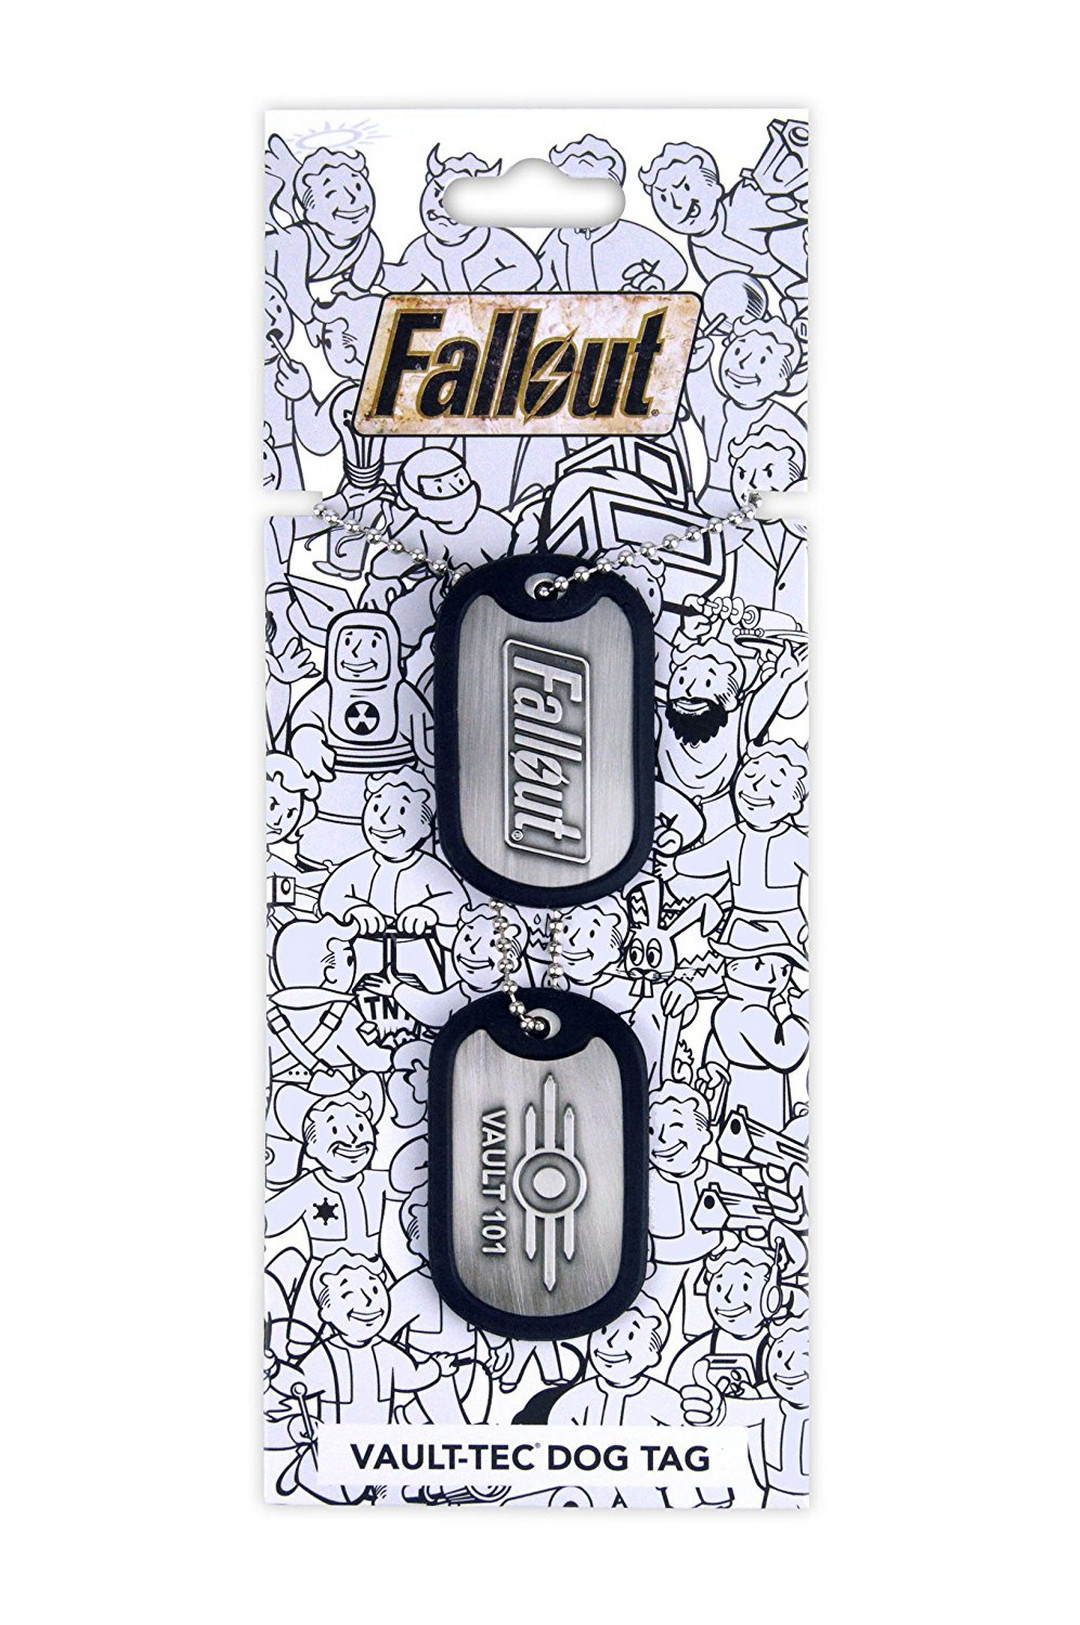 Fallout - Vault 101 Dog Tags